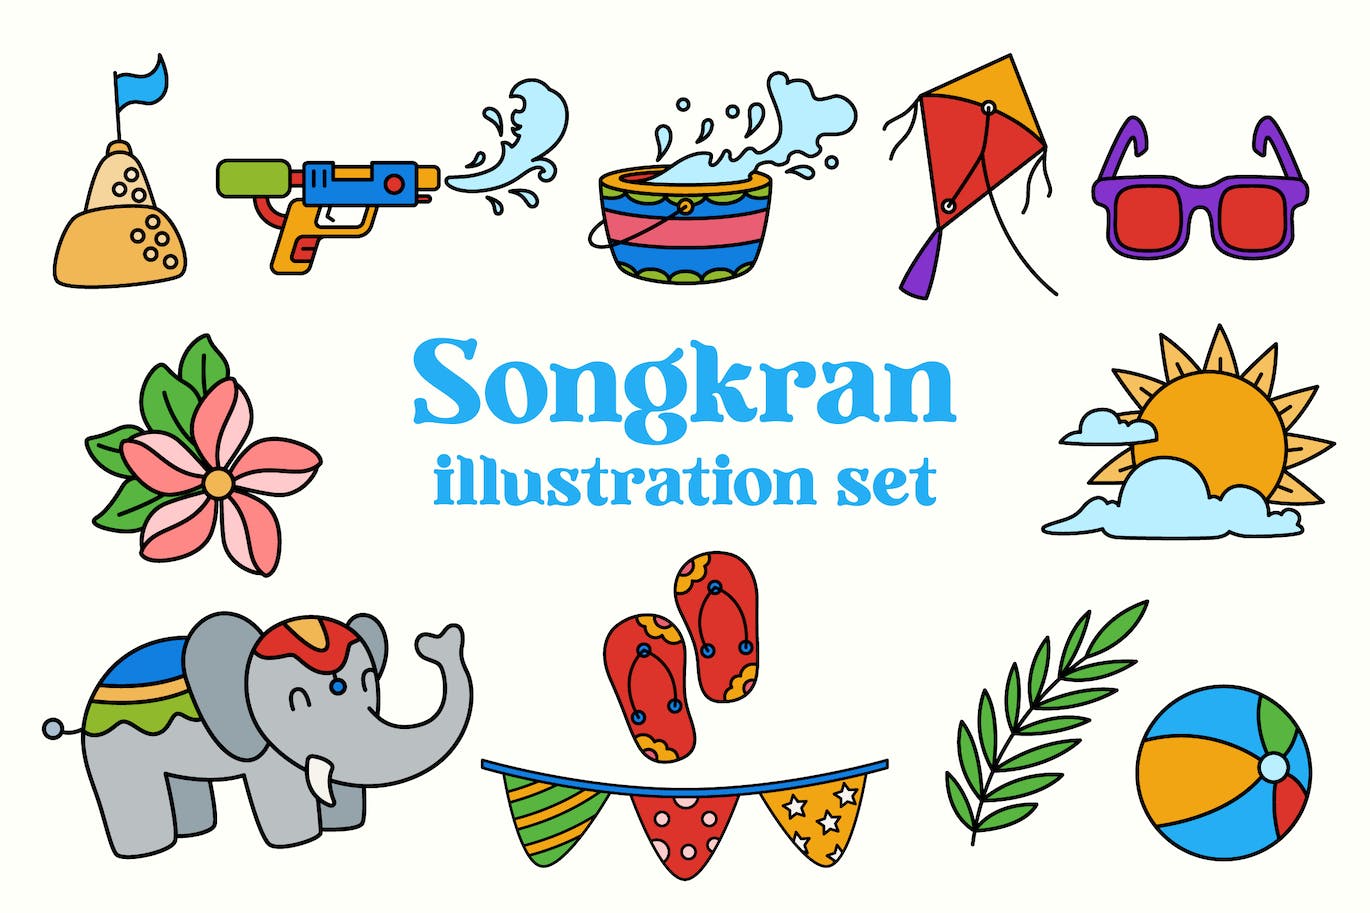 宋干节泼水节元素插画集 Songkran Illustration Set 图片素材 第1张